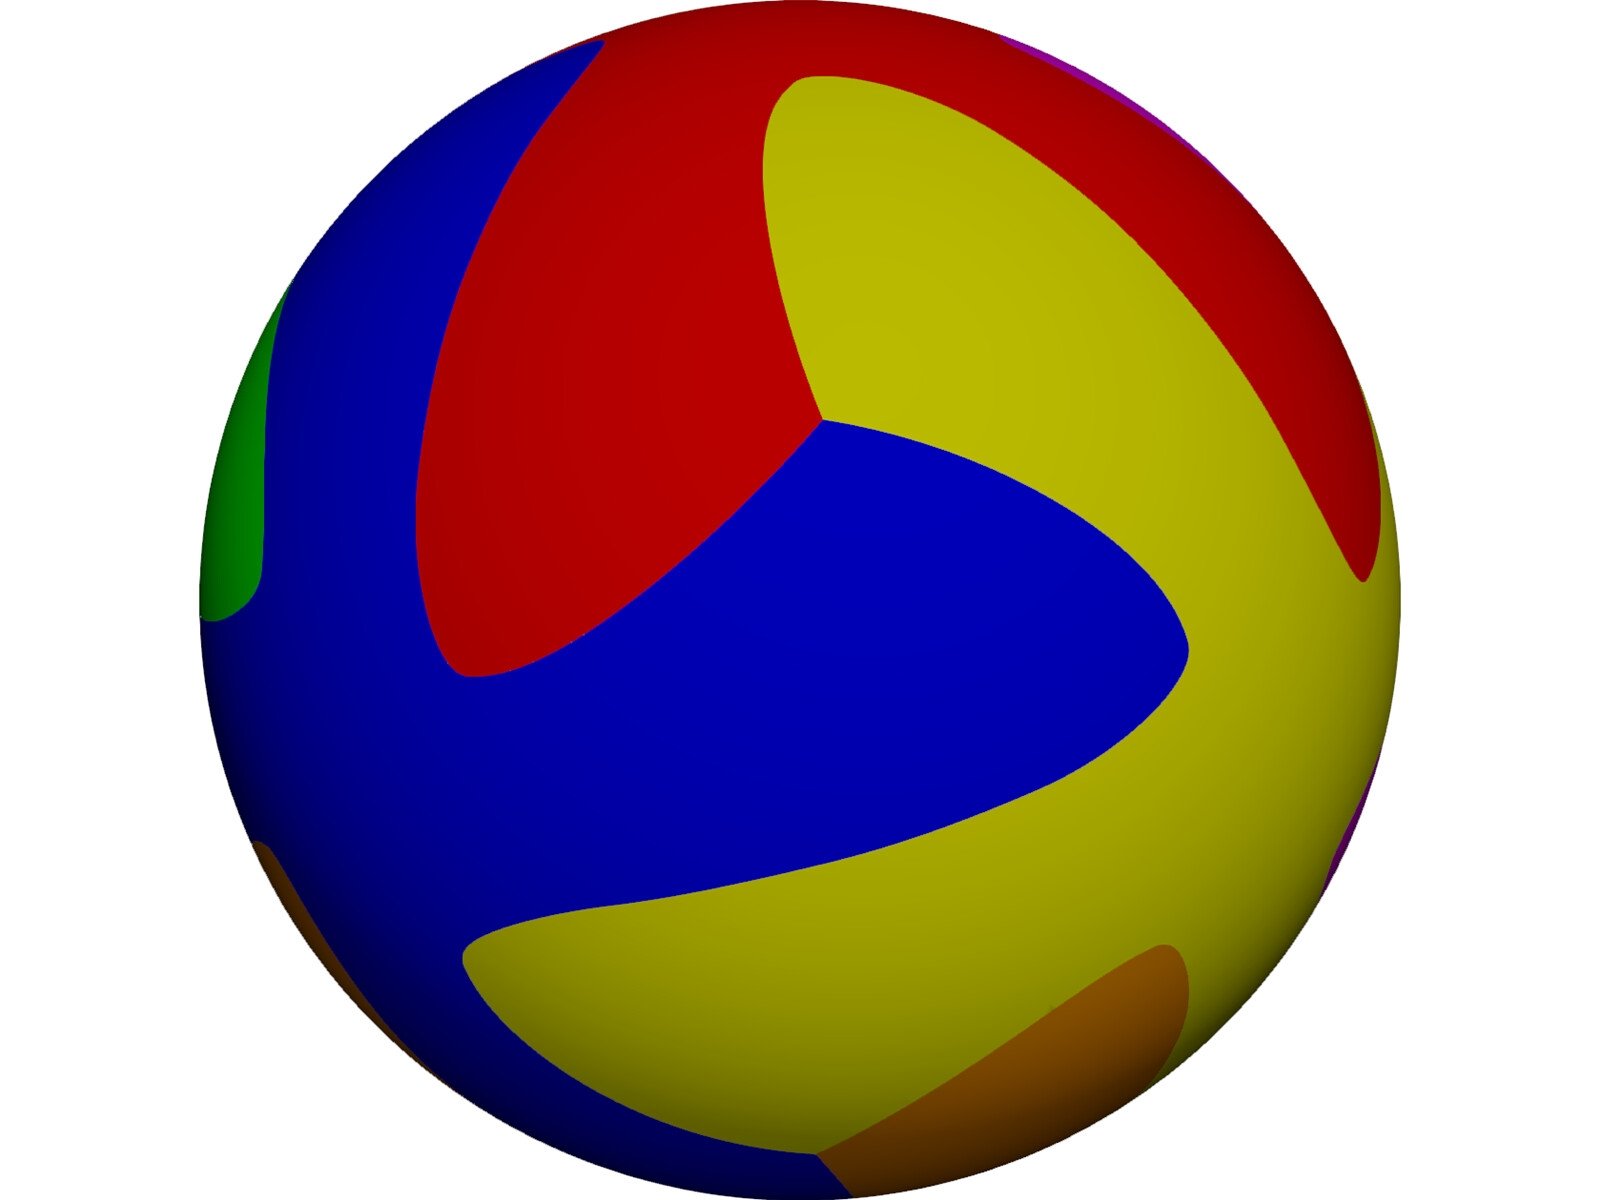 Картинка мяча для детей на прозрачном фоне